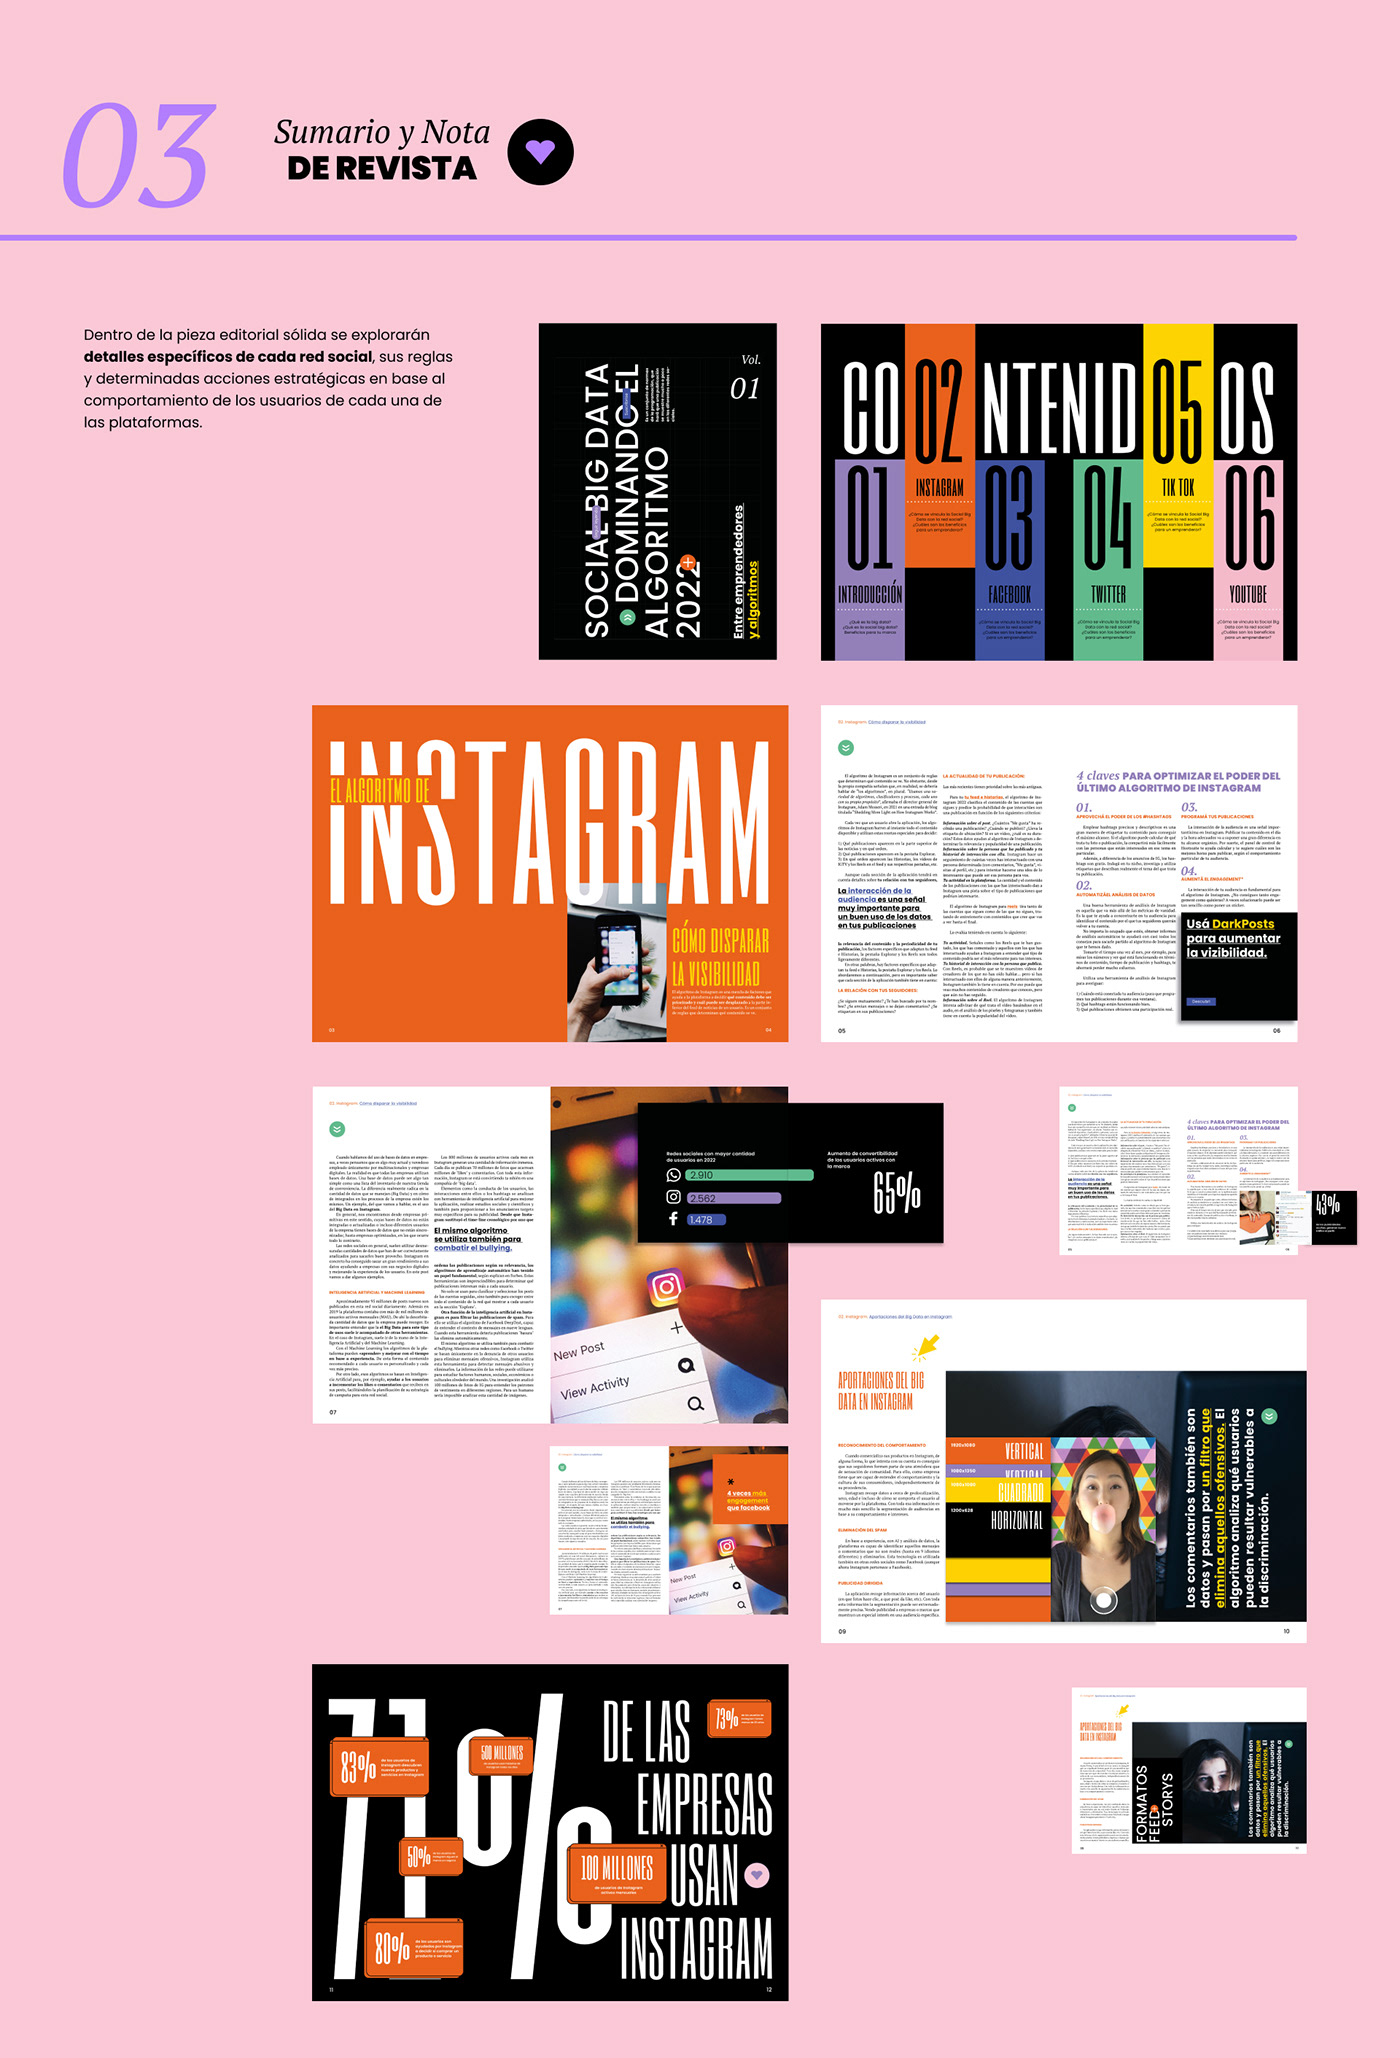 Big Data diseño gráfico editorial Figma graphic design  landing page magazine marketing   Socialmedia typography  